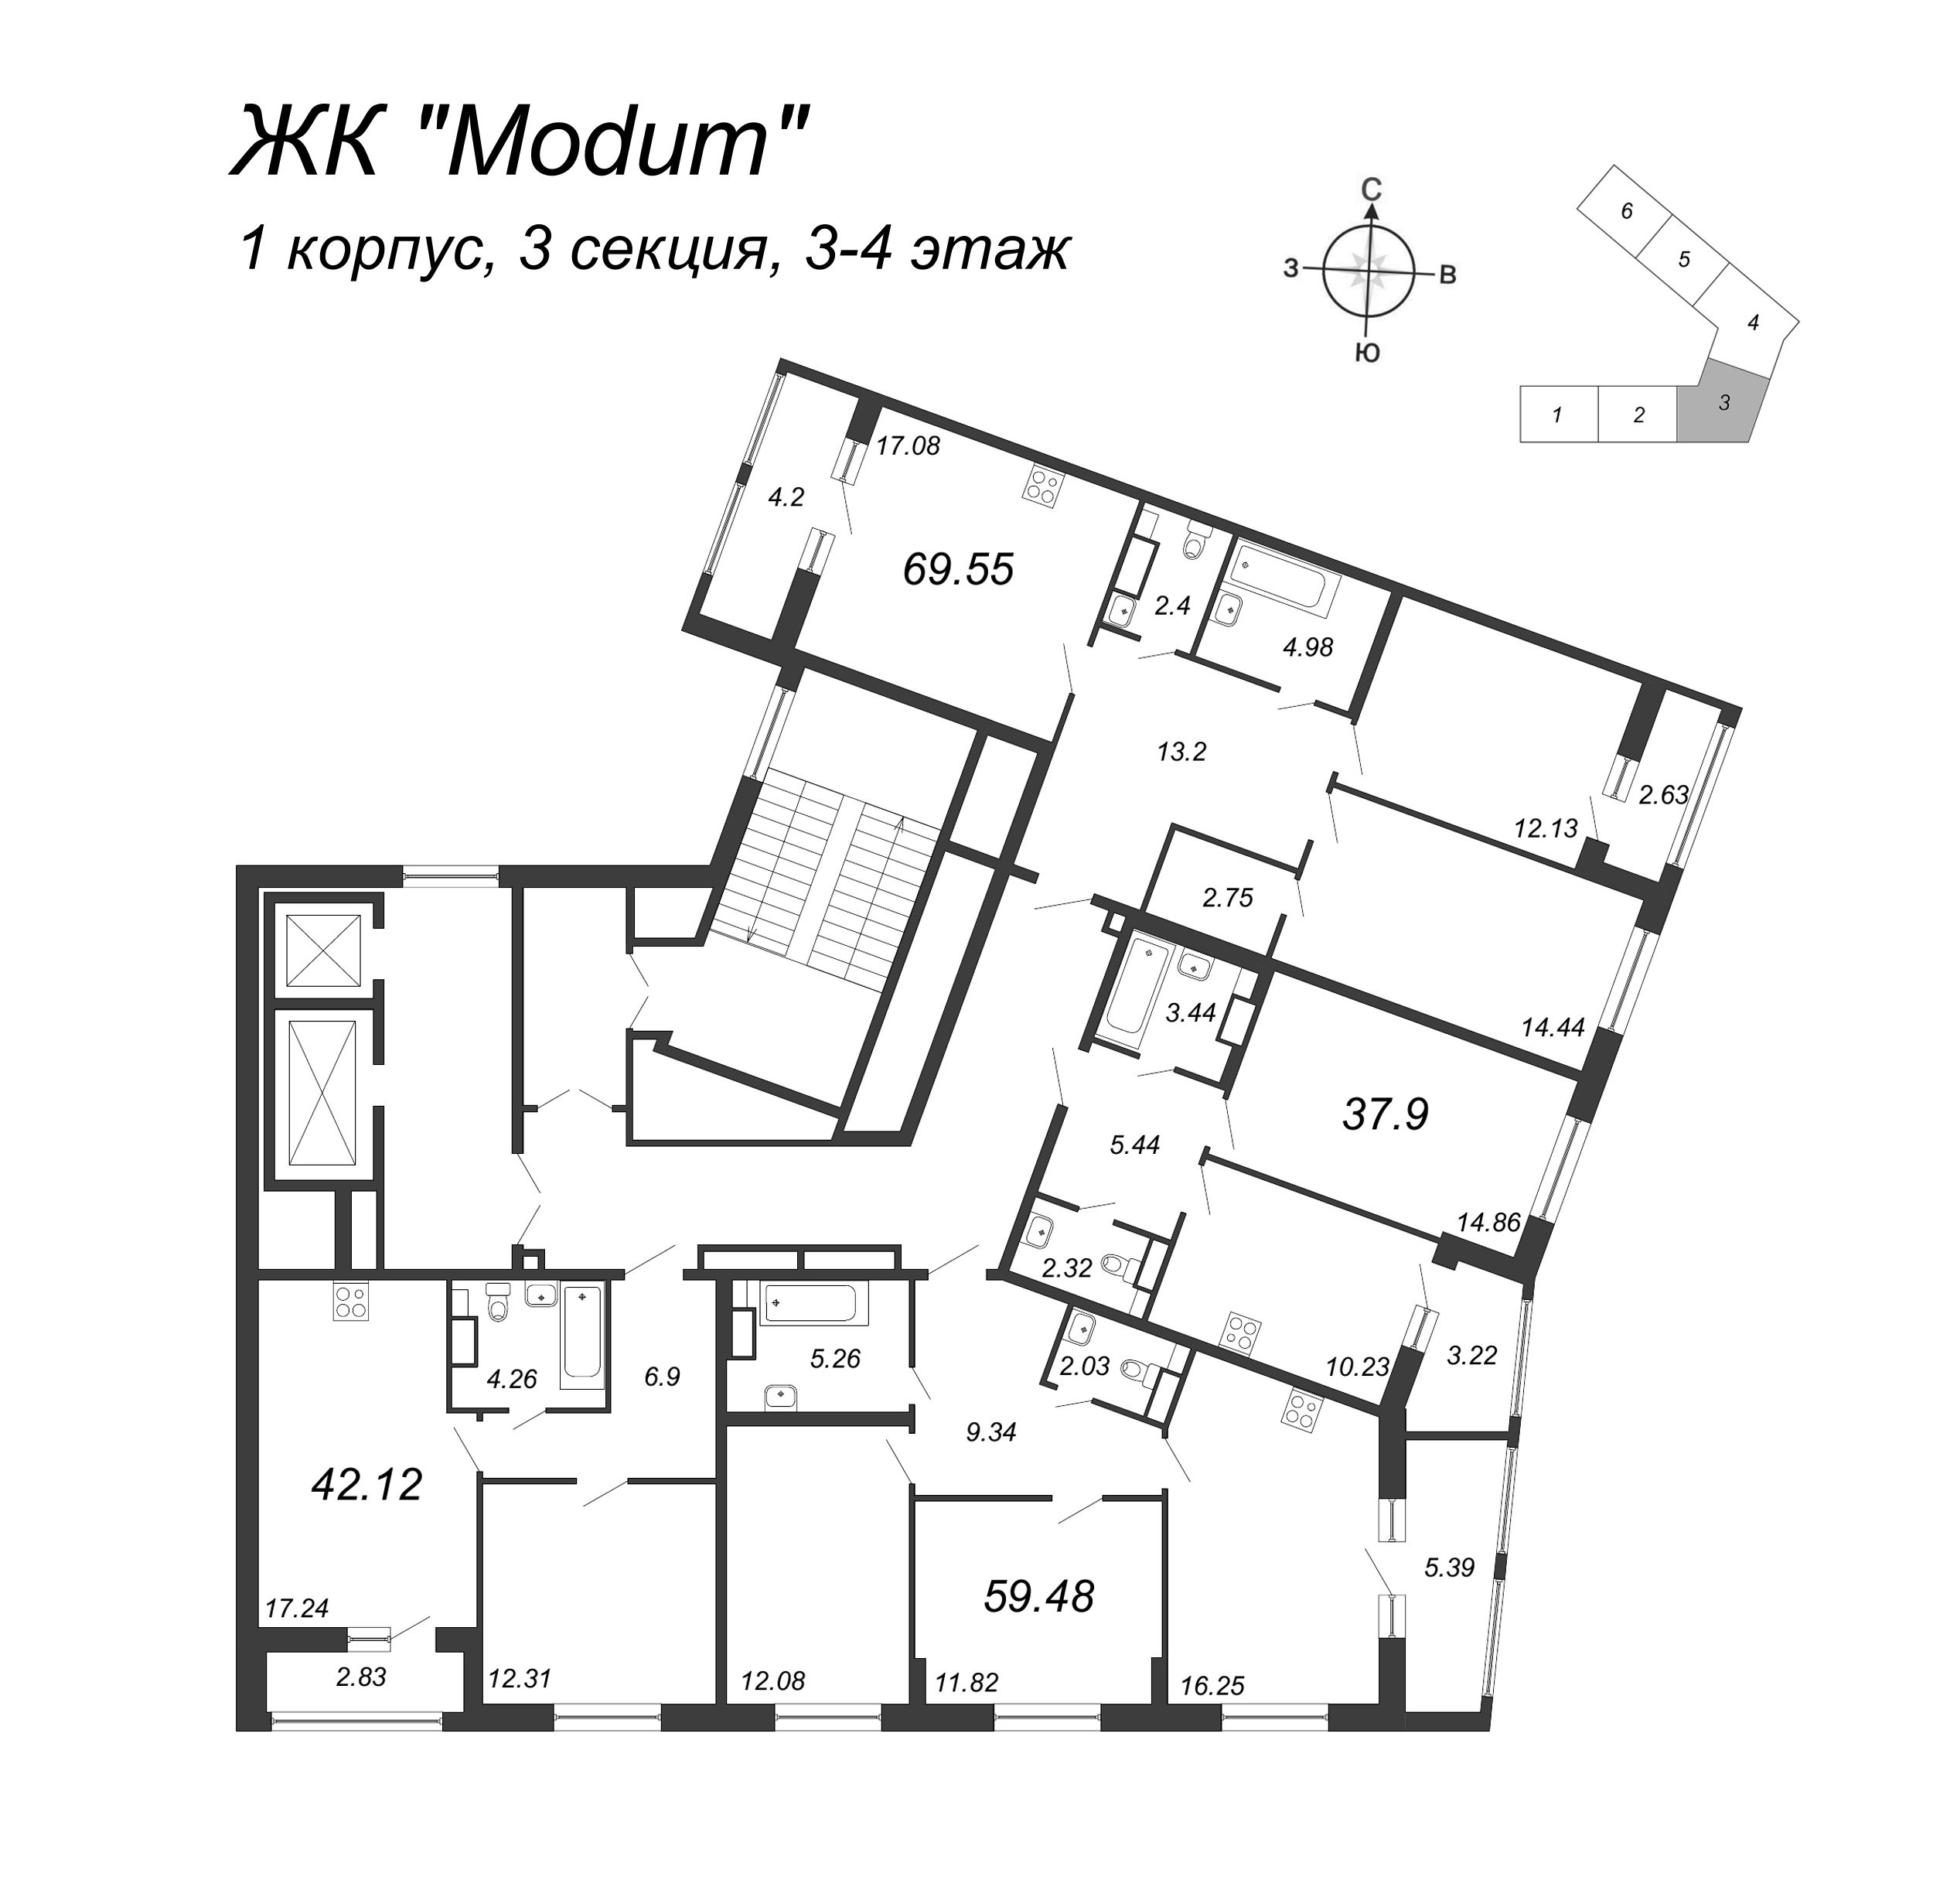 3-комнатная (Евро) квартира, 69.55 м² - планировка этажа